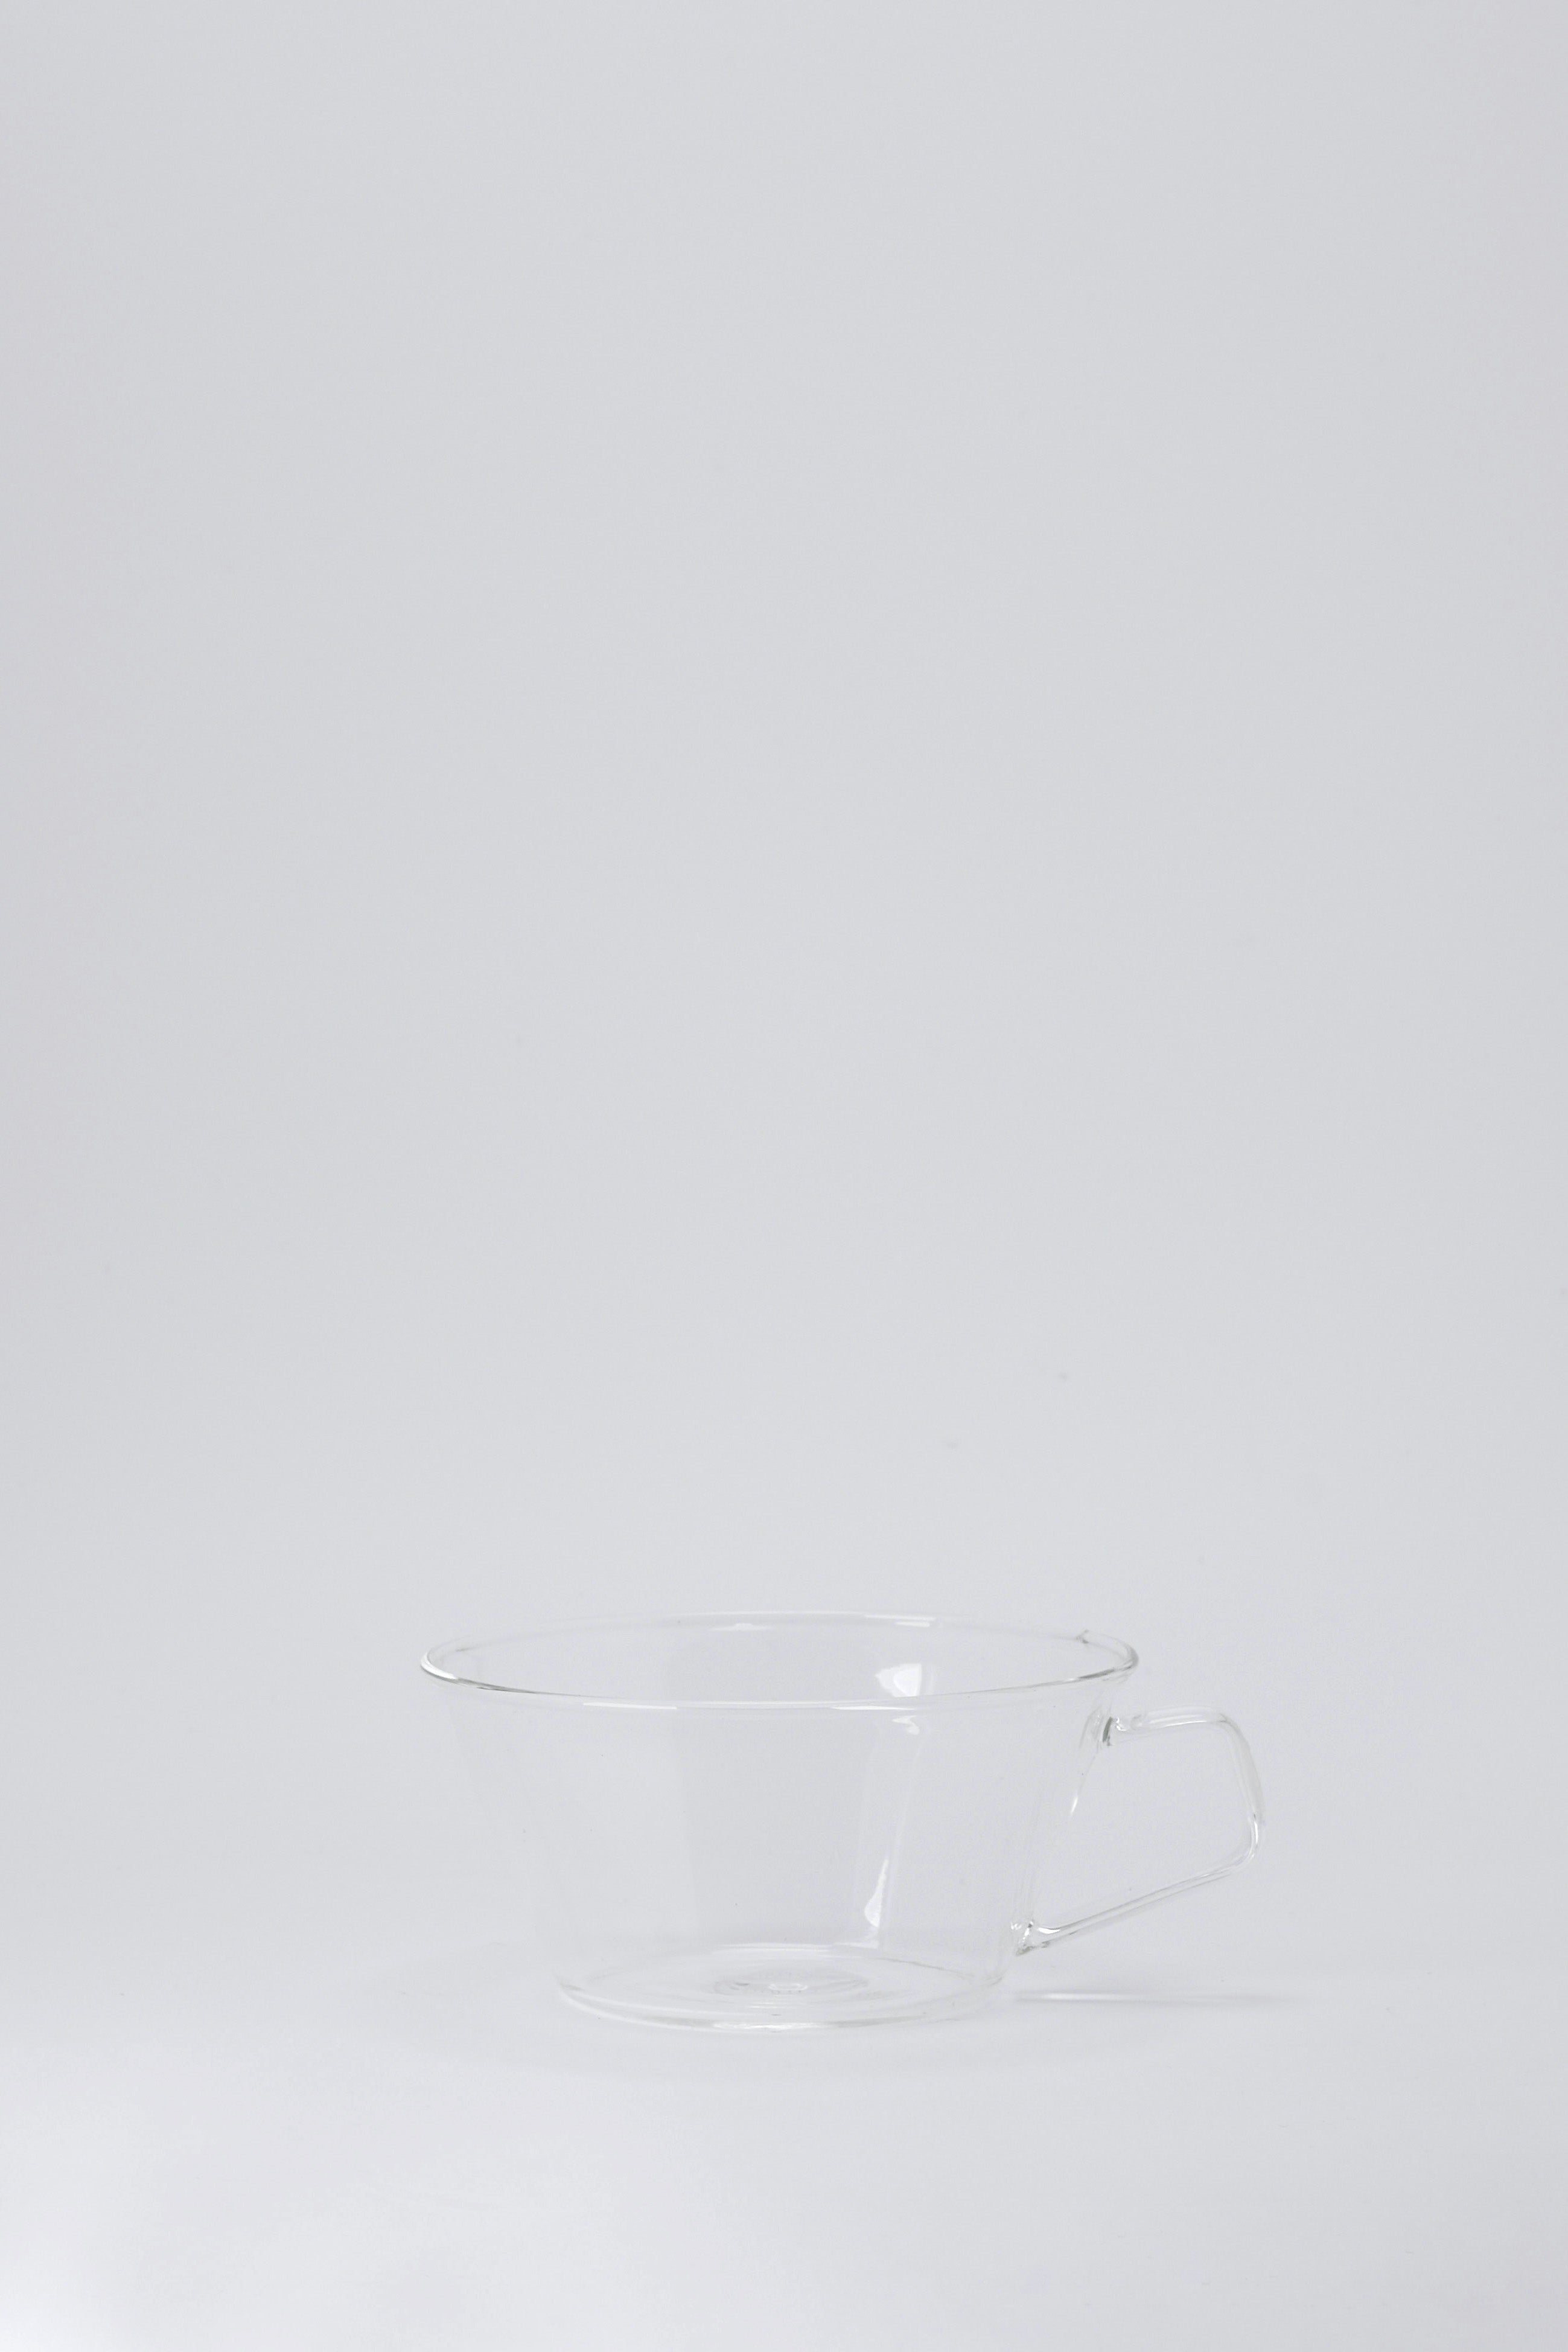 Cast tea cup-Kinto-[interior]-[design]-KIOSK48TH